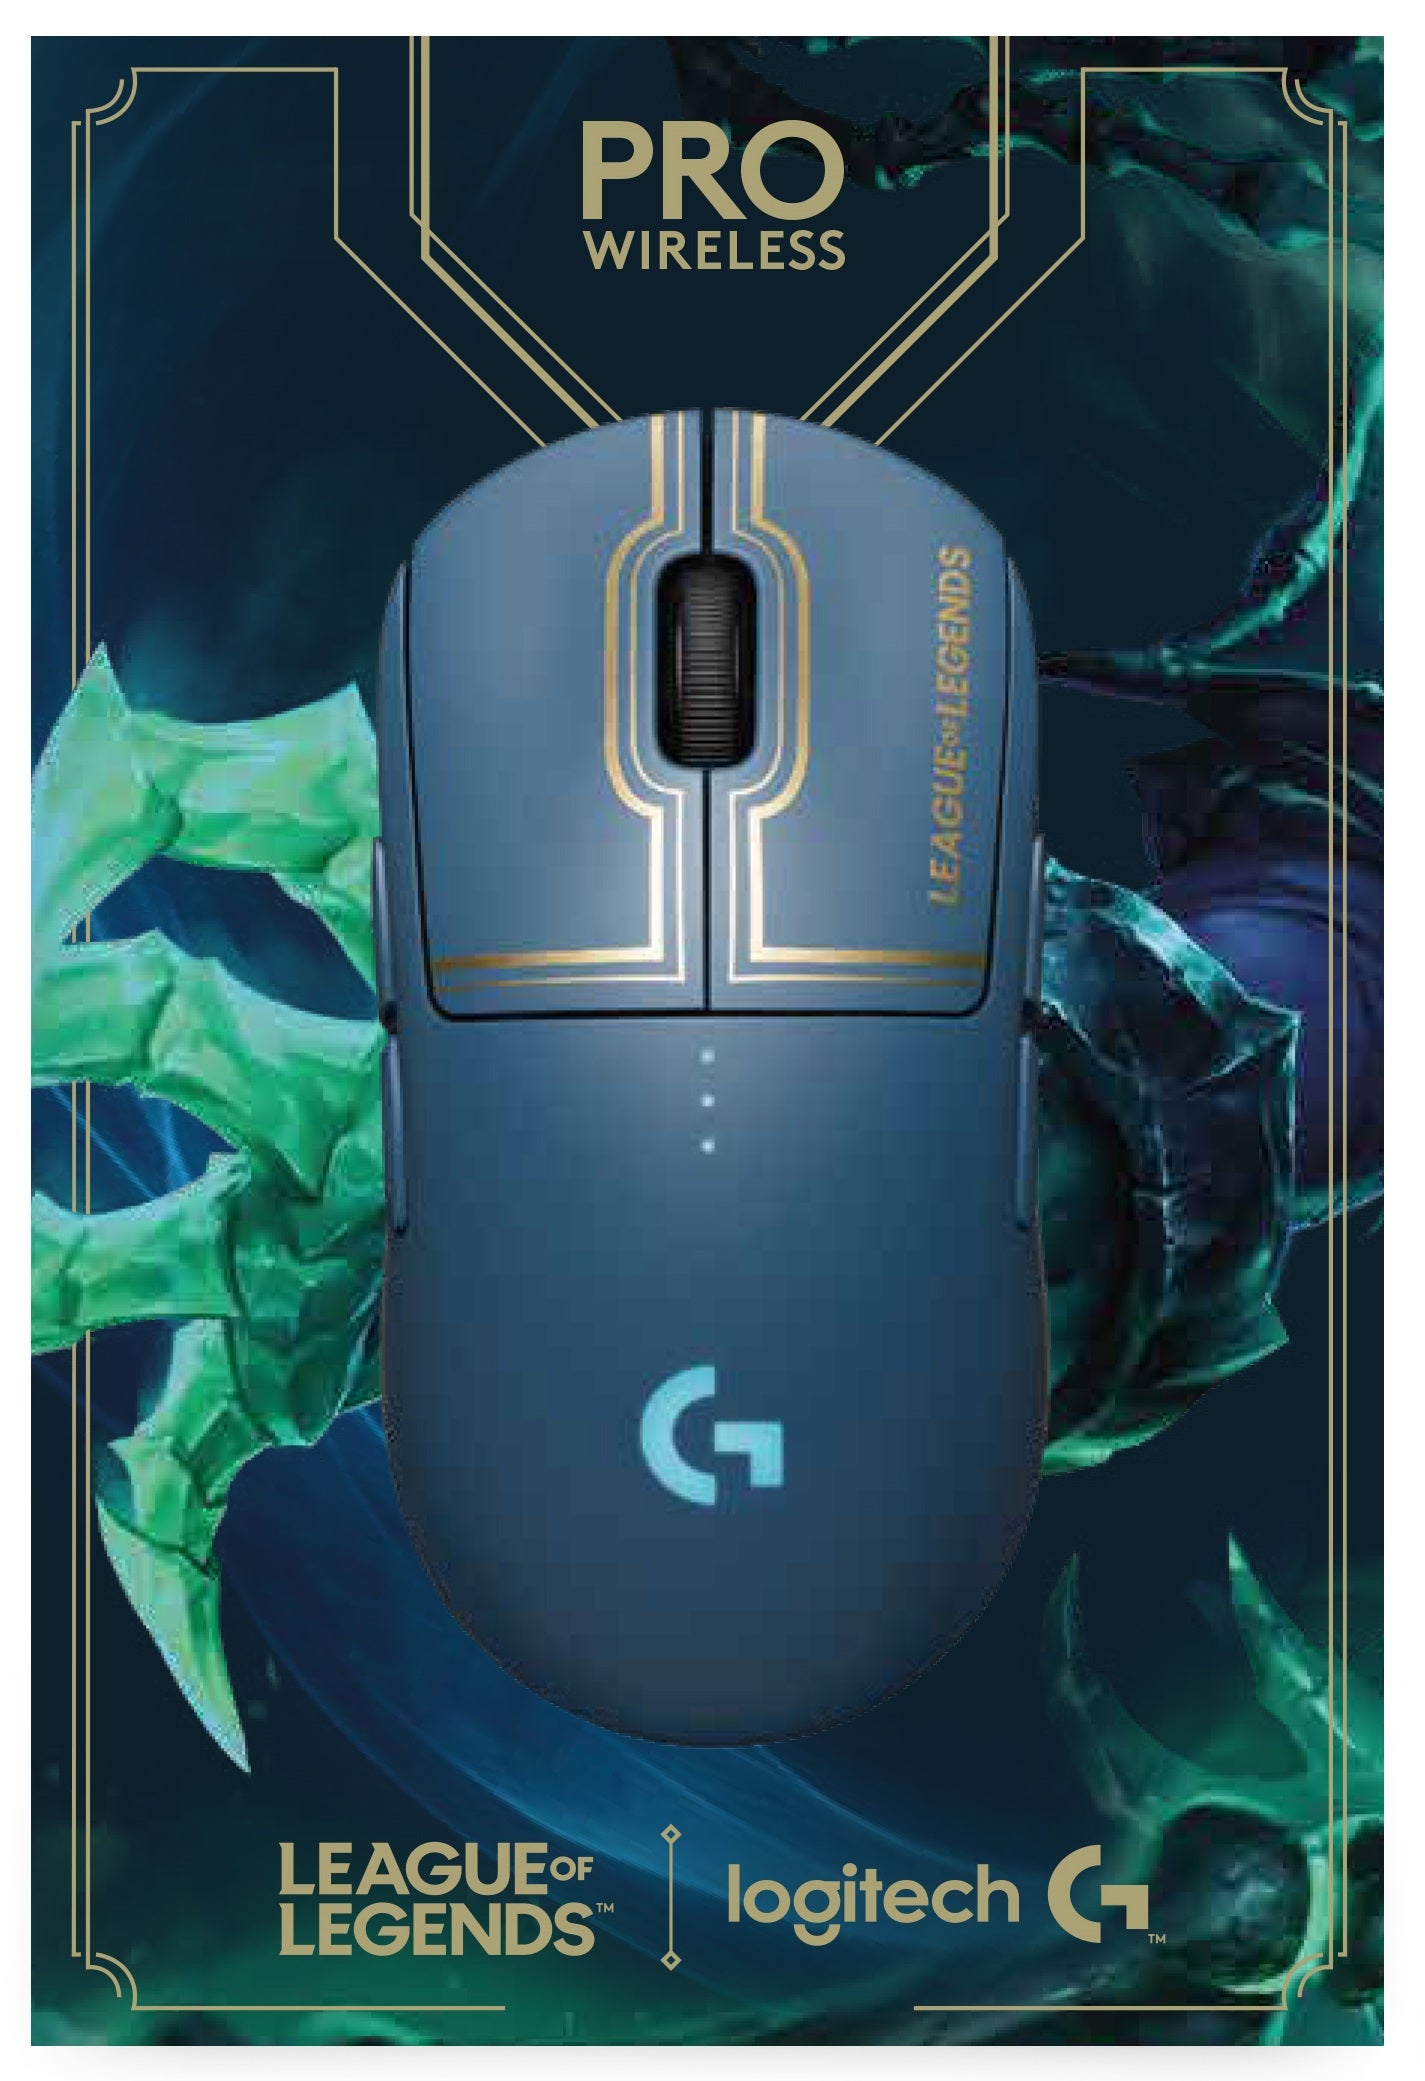 SOURIS Sans Fil/Logitech G305 Lightspeed Wireless Gaming Mouse LoL